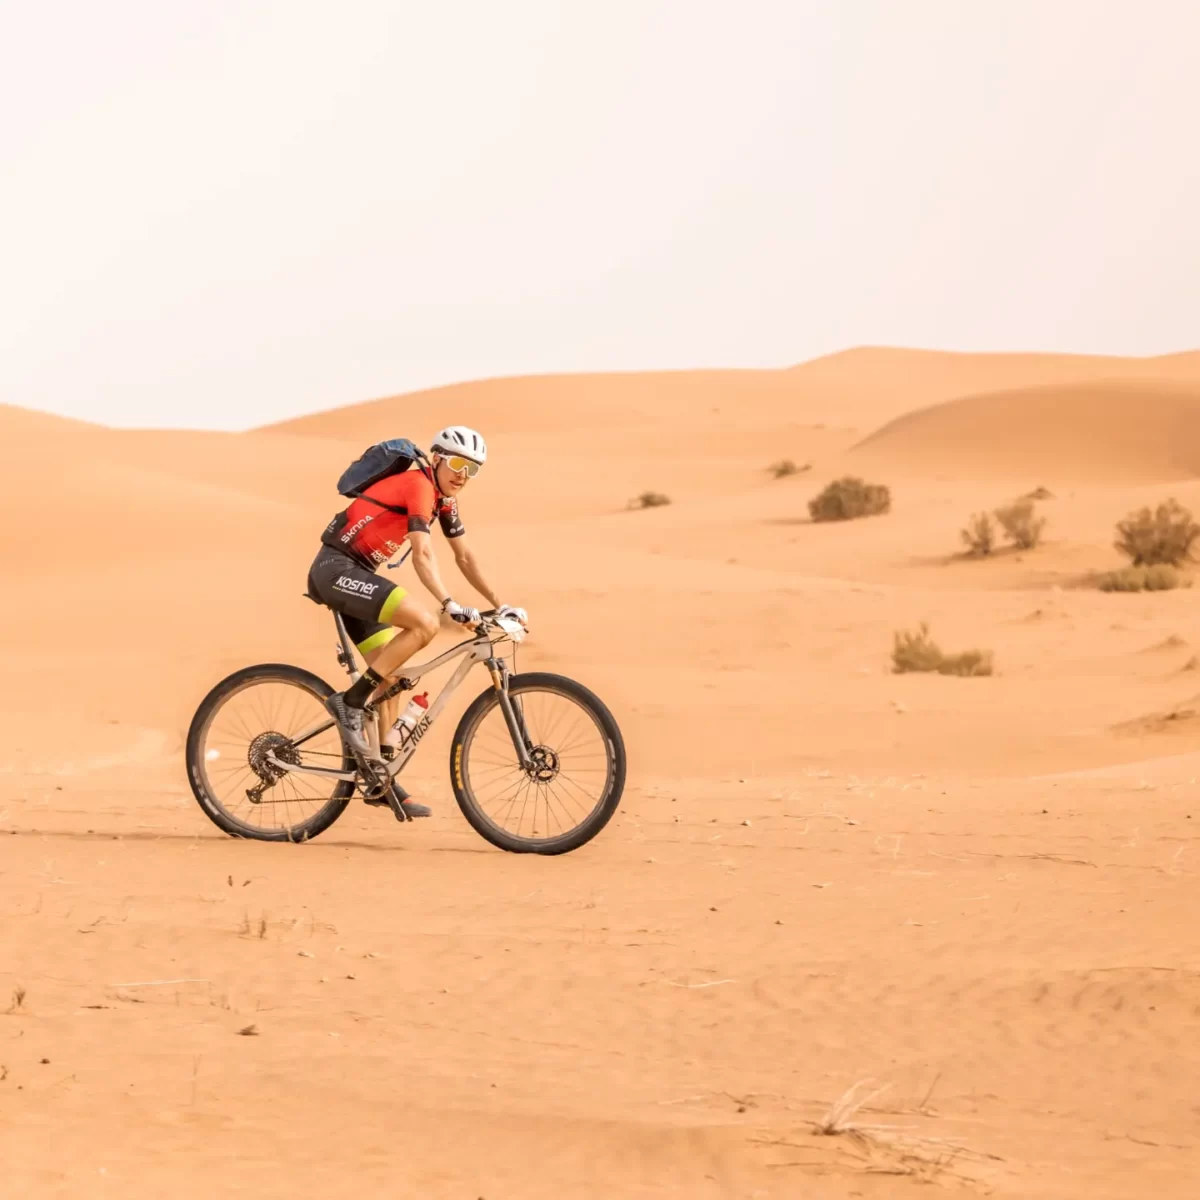 Titan Desert Marokko, DNF. auf der 5ten Etappe.